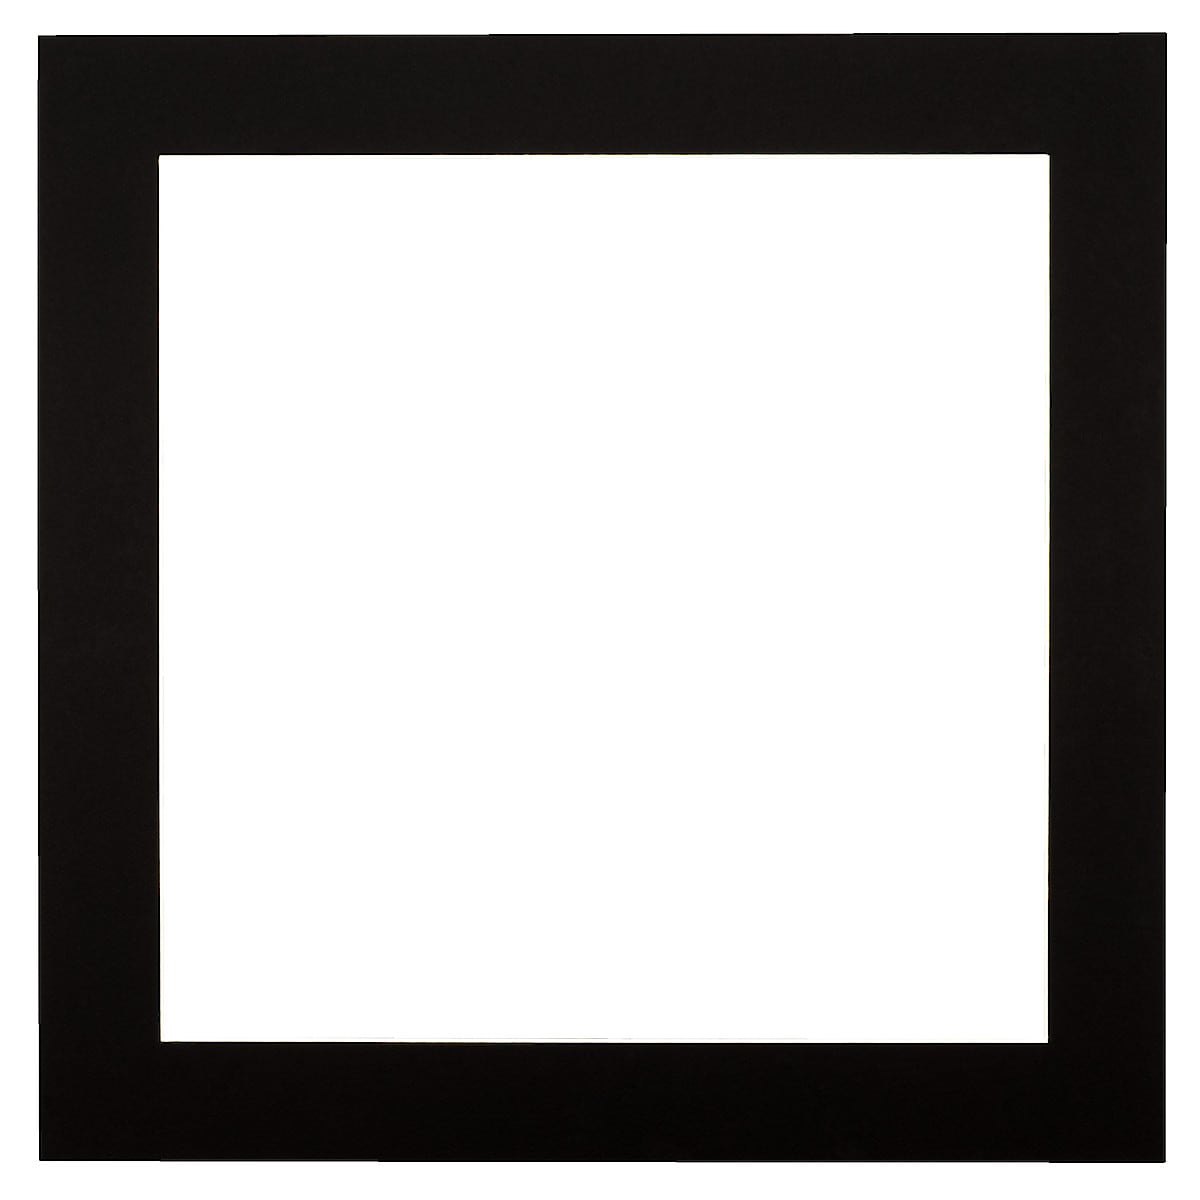 Черная рамка для фото на прозрачном фоне